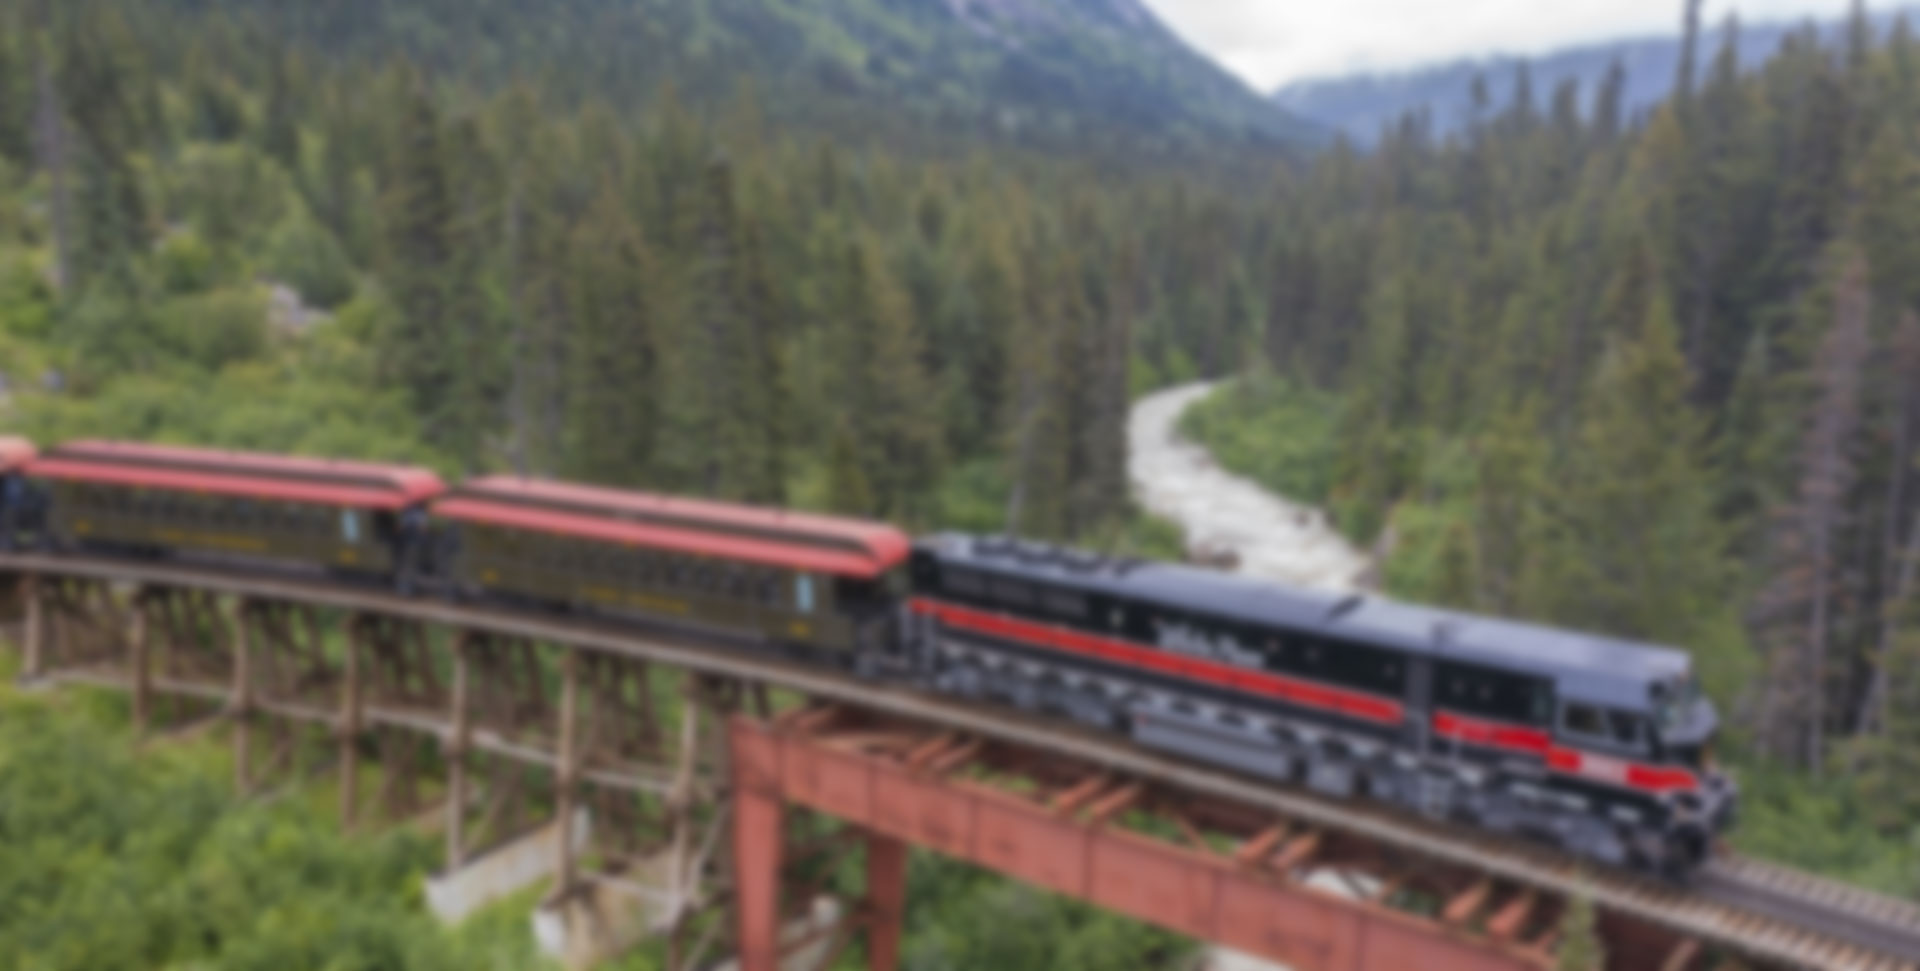 Alaska Train Excursion showing a train crossing a bridge with a wild roaring river underneath it